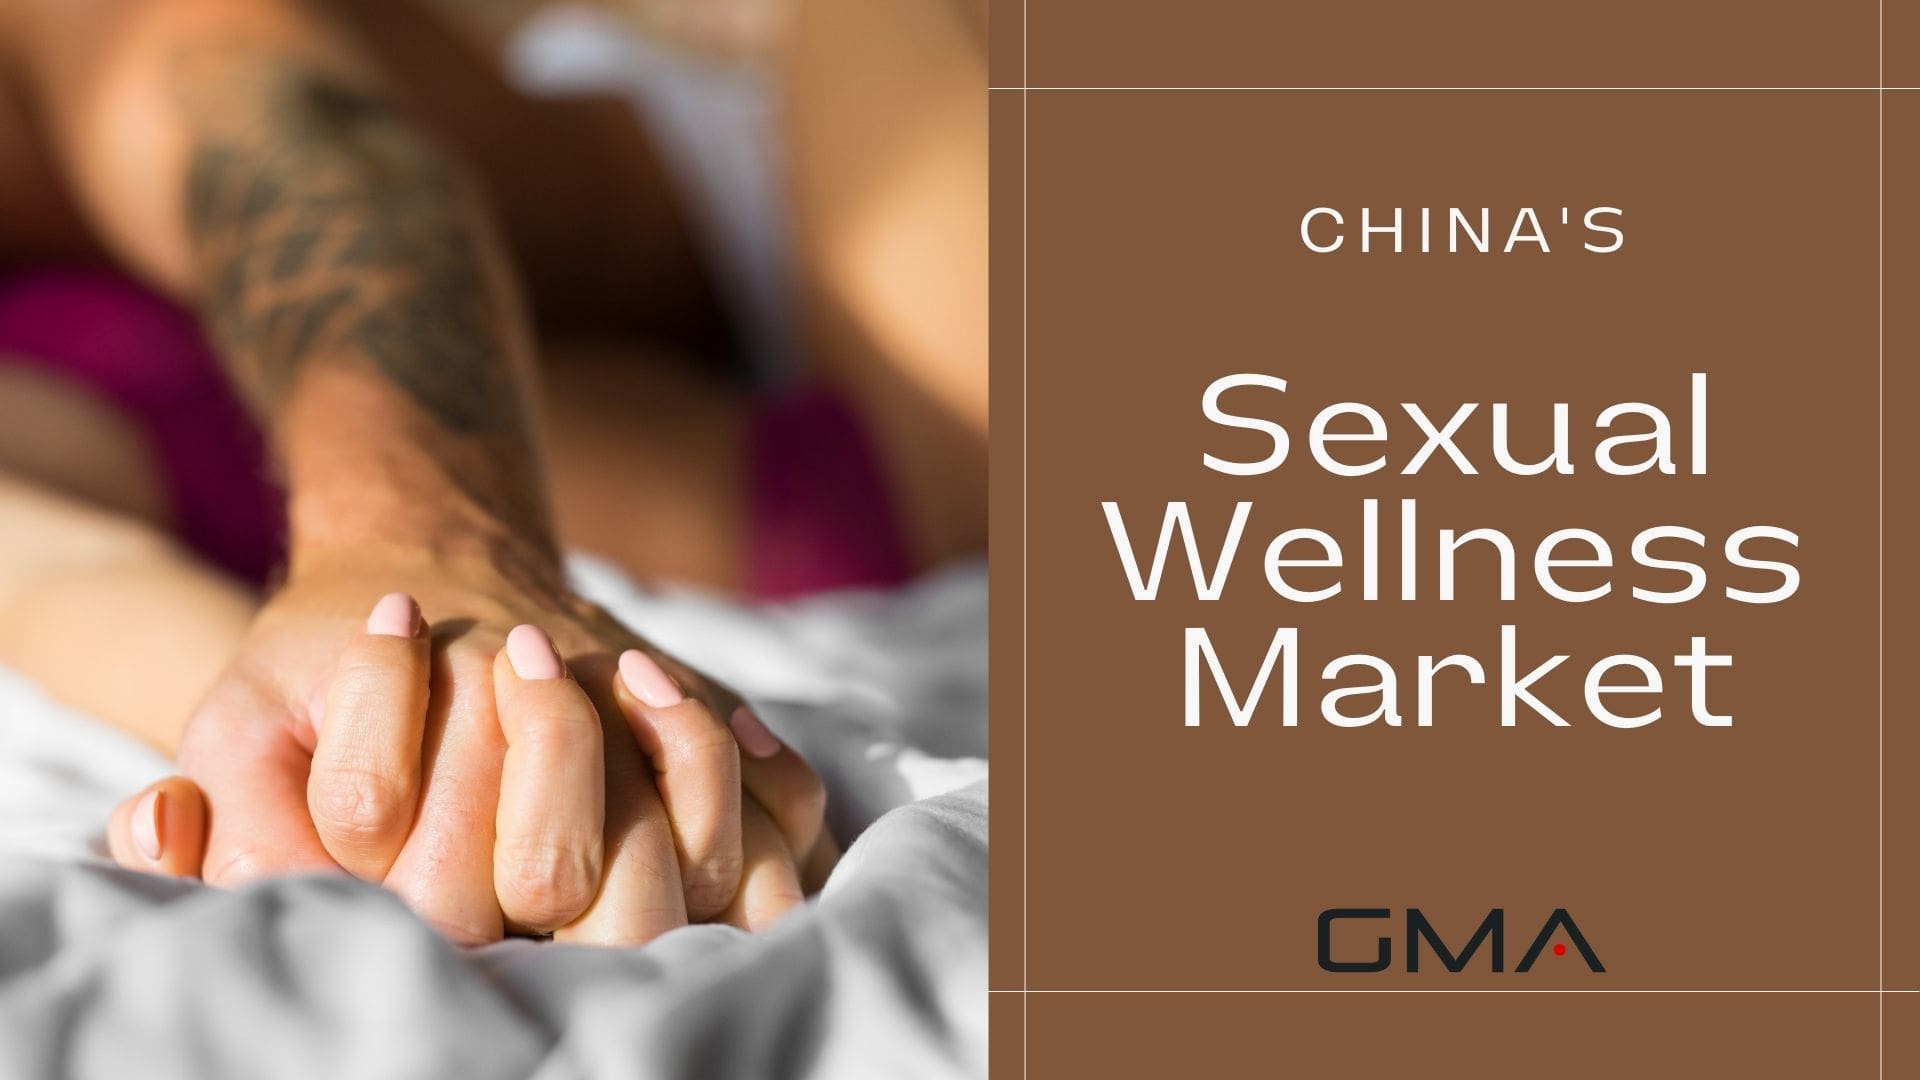 China's Sexual Wellness Market